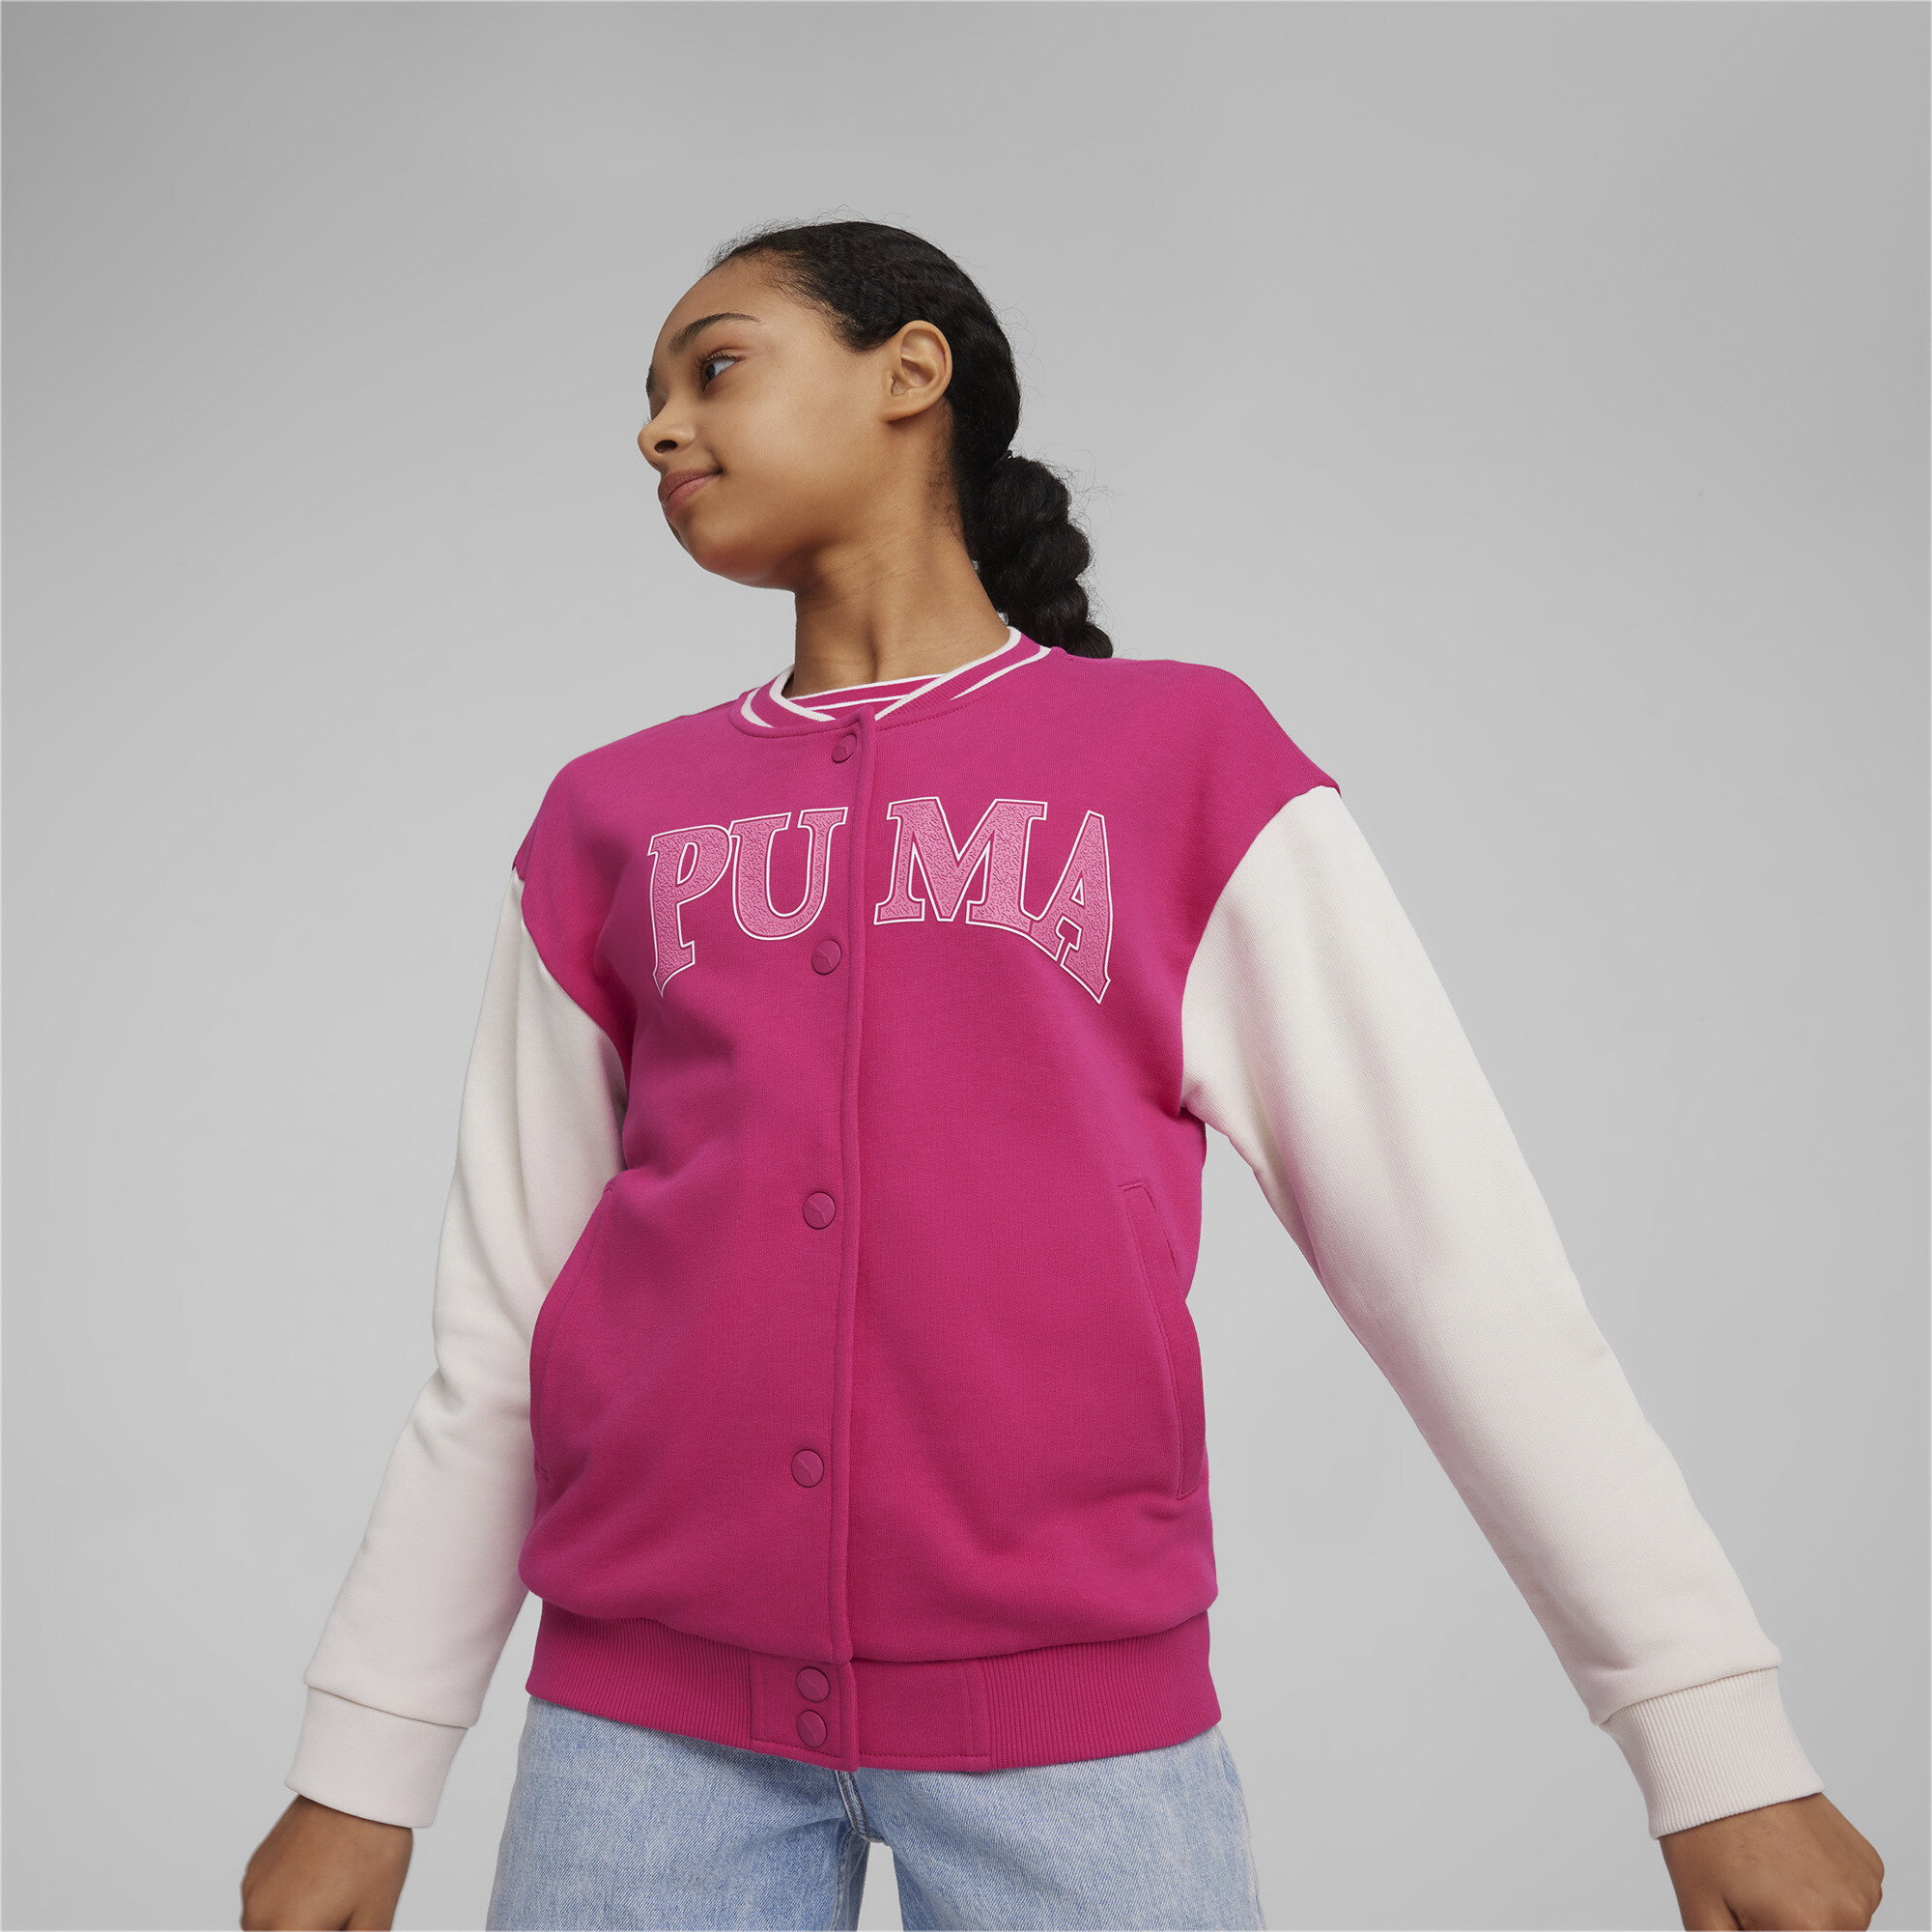 Women's Puma SQUAD Youth Jacket, Pink, Size 7-8Y, Clothing